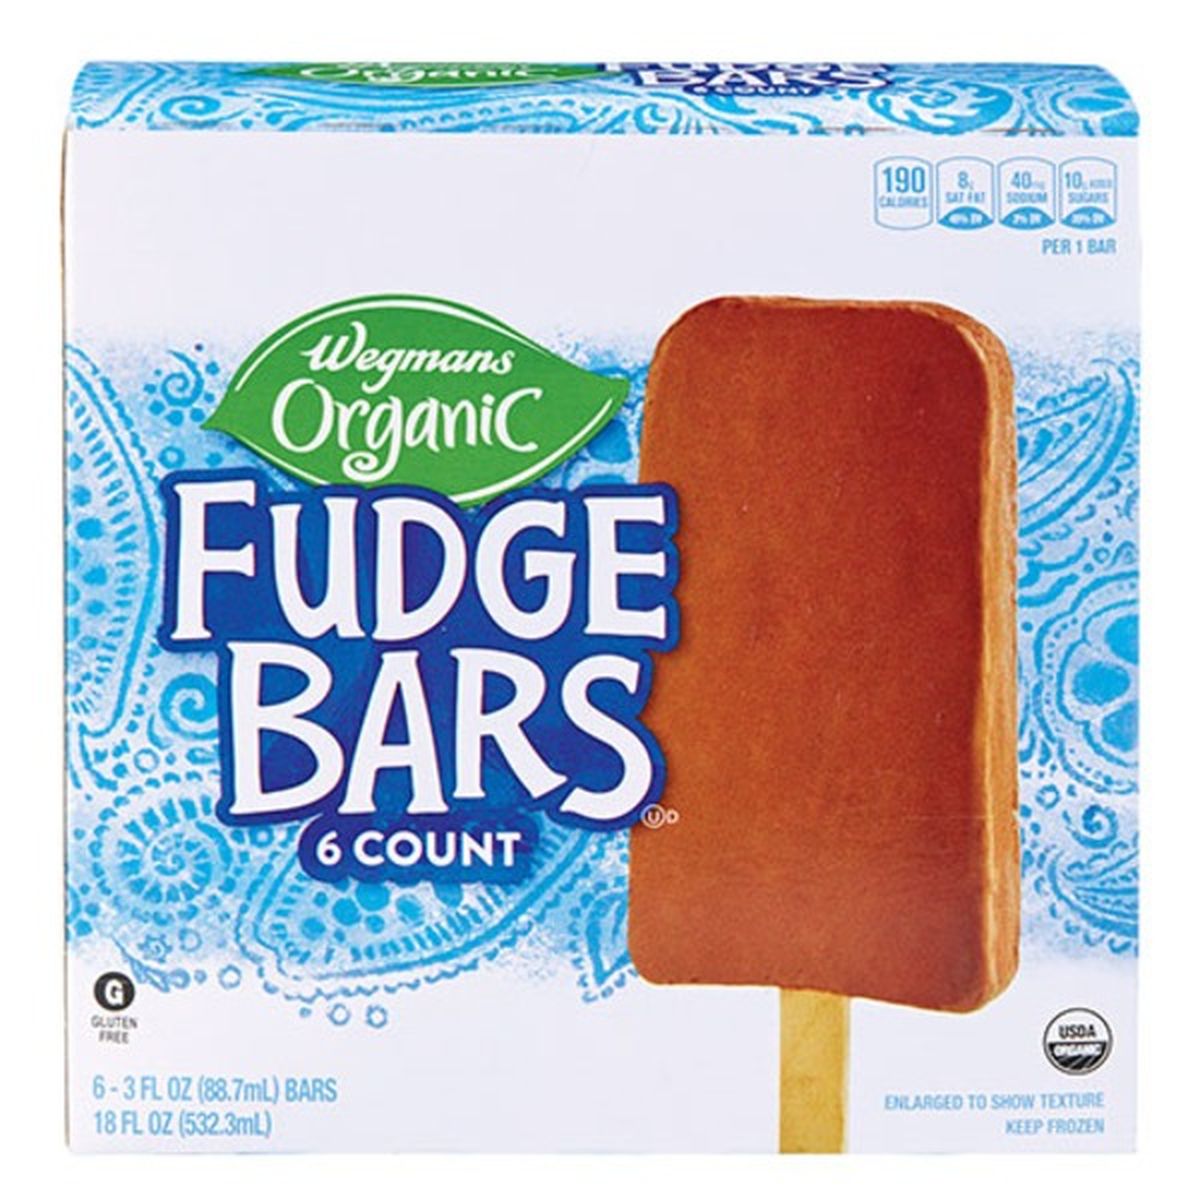 Calories in Wegmans Organic Fudge Bars